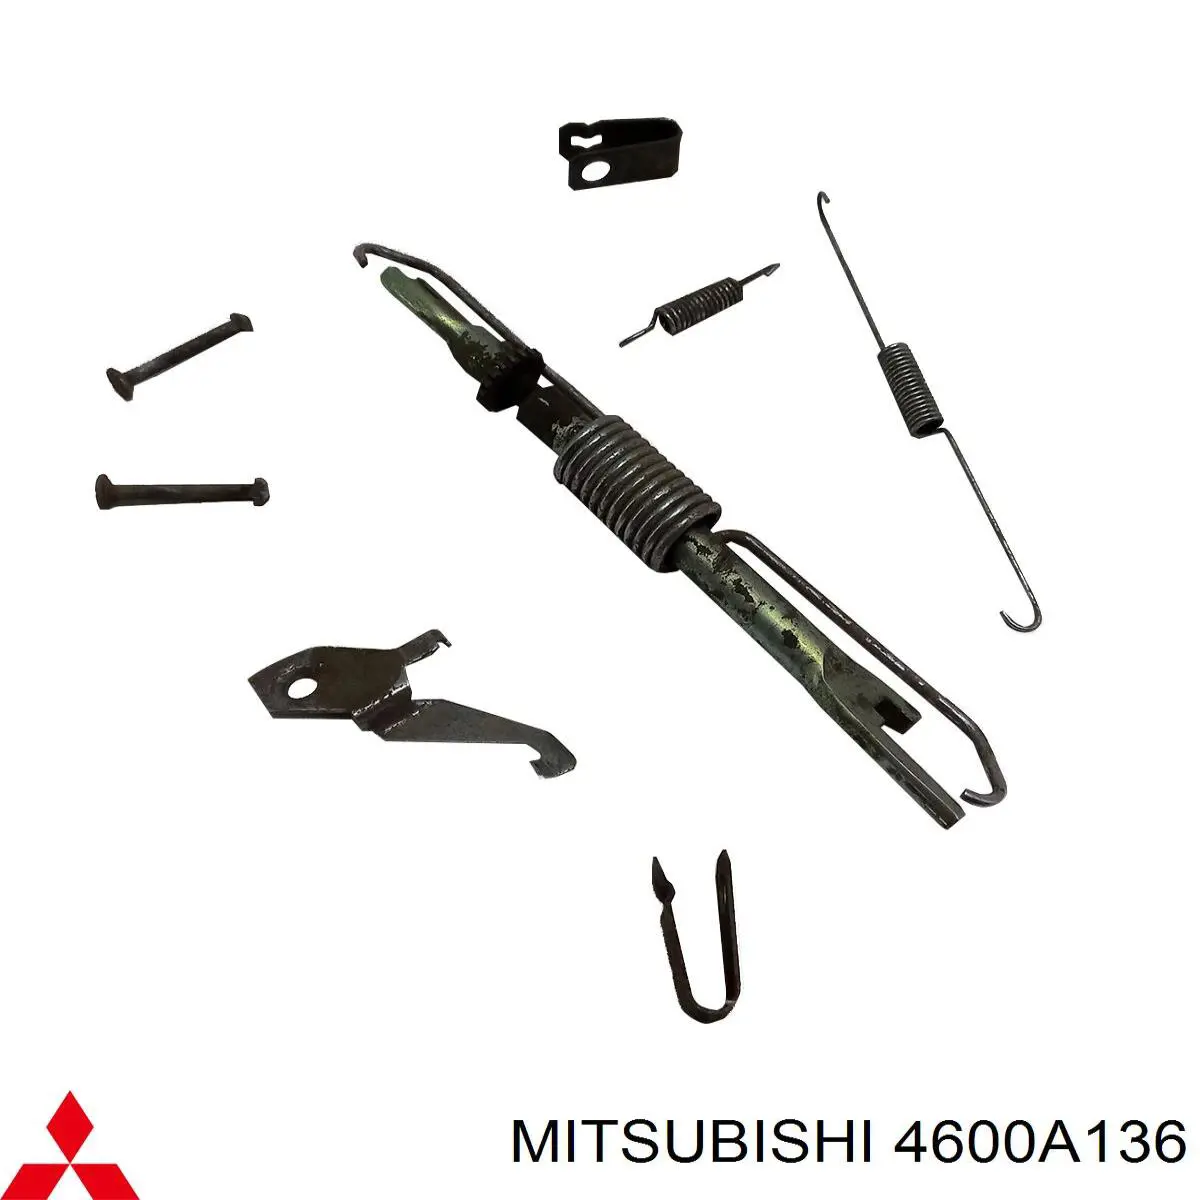 4600A136 Mitsubishi kit reparación, palanca freno detención (pinza freno)